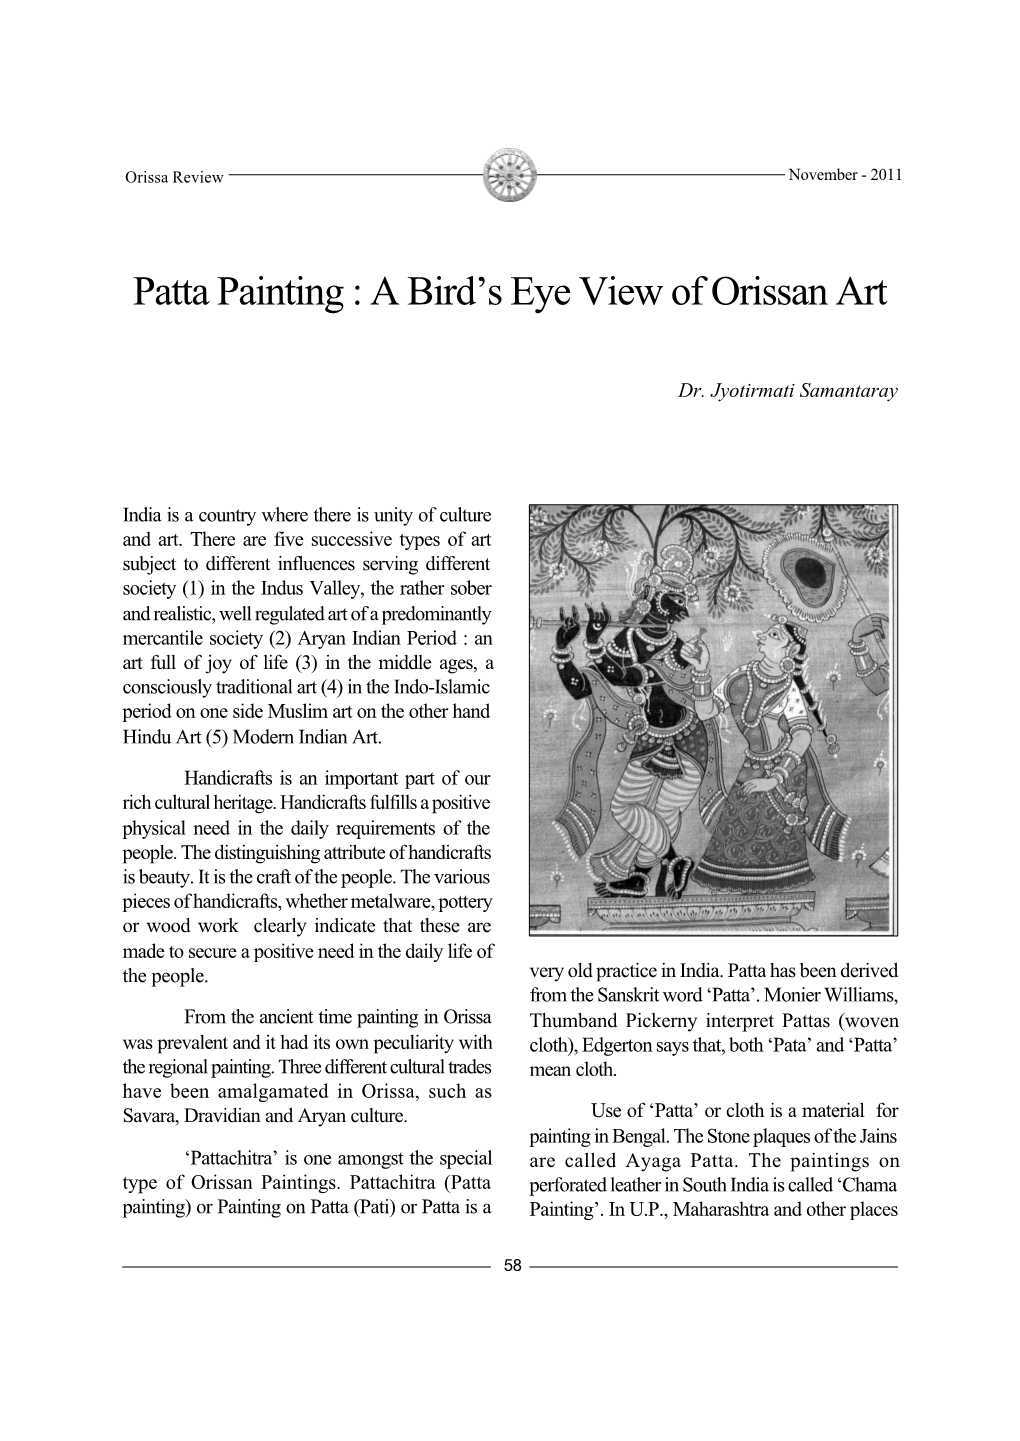 Patta Painting : a Bird's Eye View of Orissan